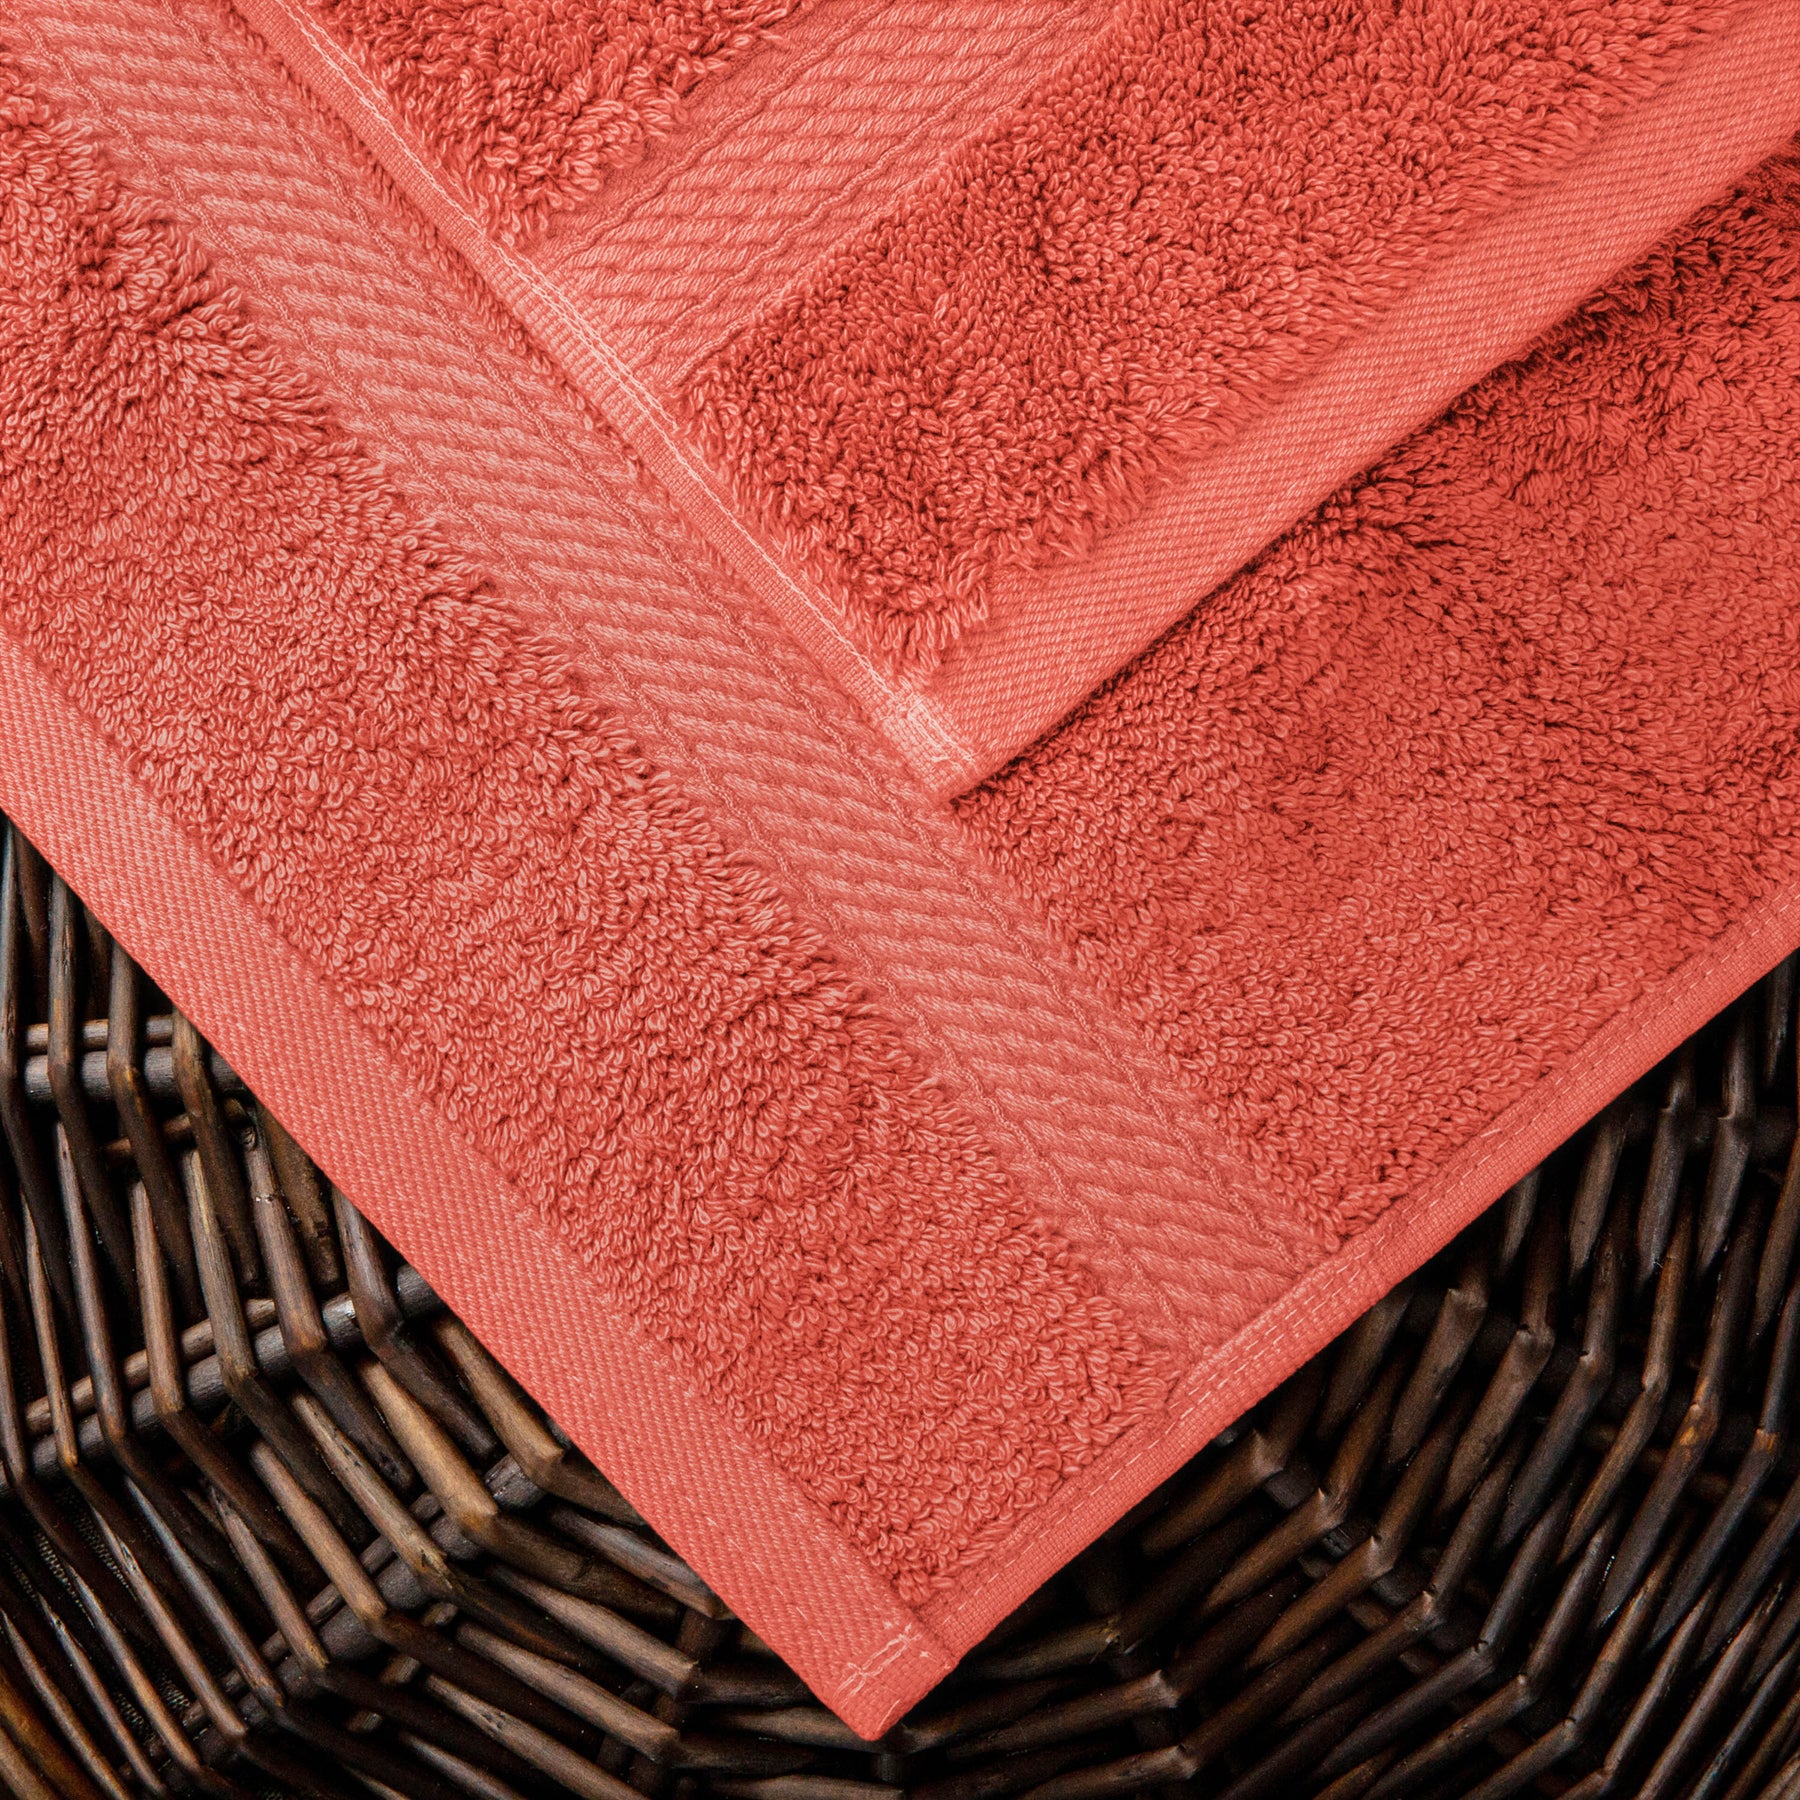 Superior 900GSM Egyptian Cotton 2-Piece Bath Towel Set Red 900GSM